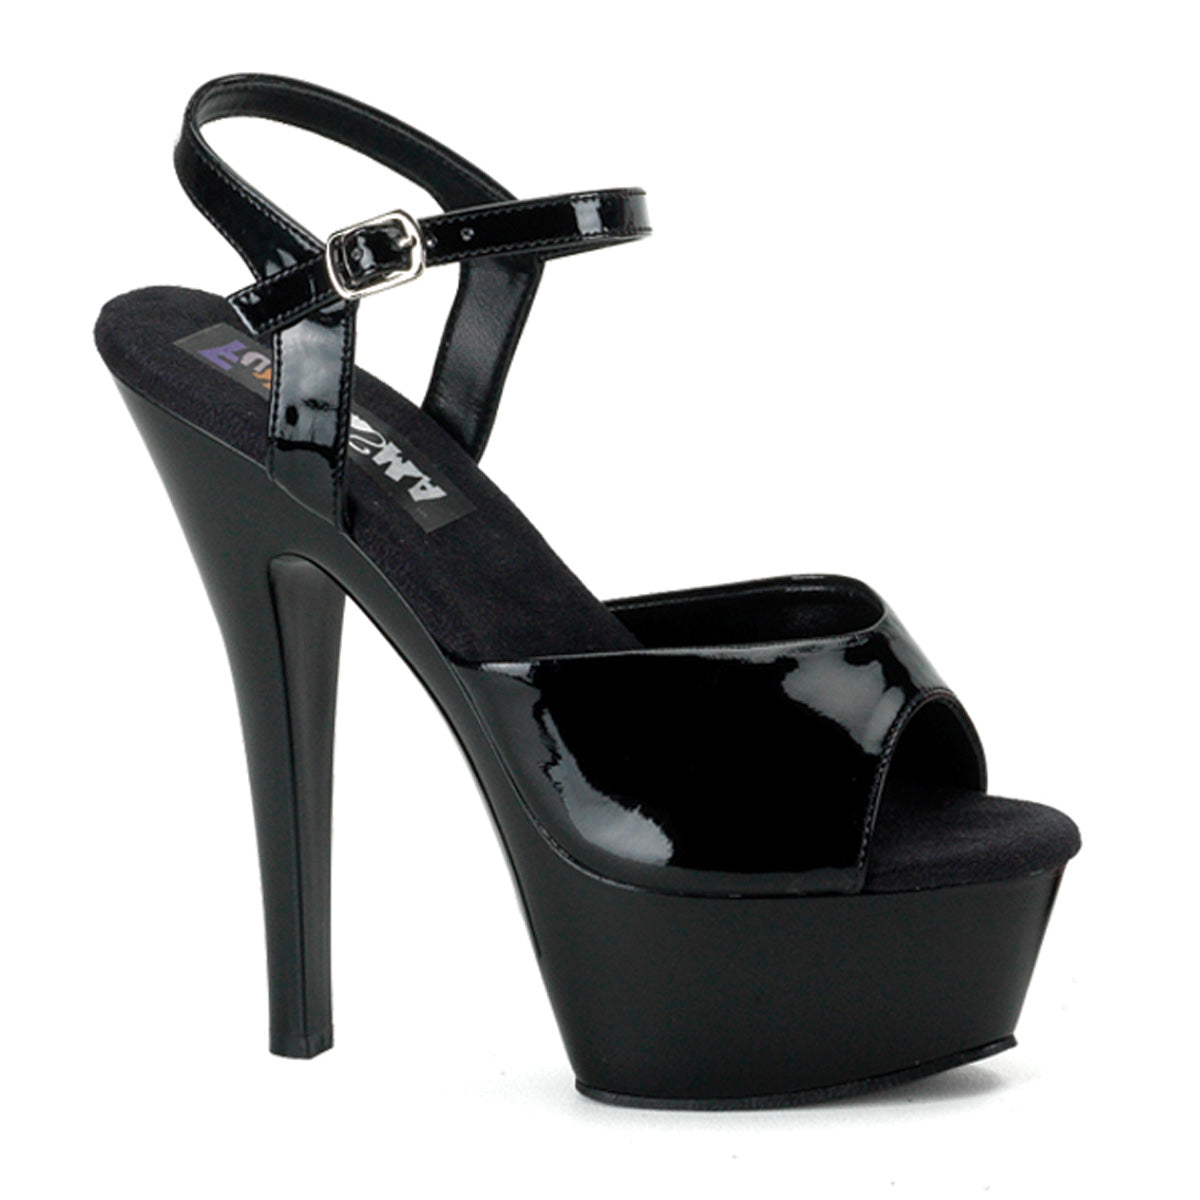 JULIET-209 Pleasers Funtasma 6" Heel Black Patent Women's Sexy Shoes